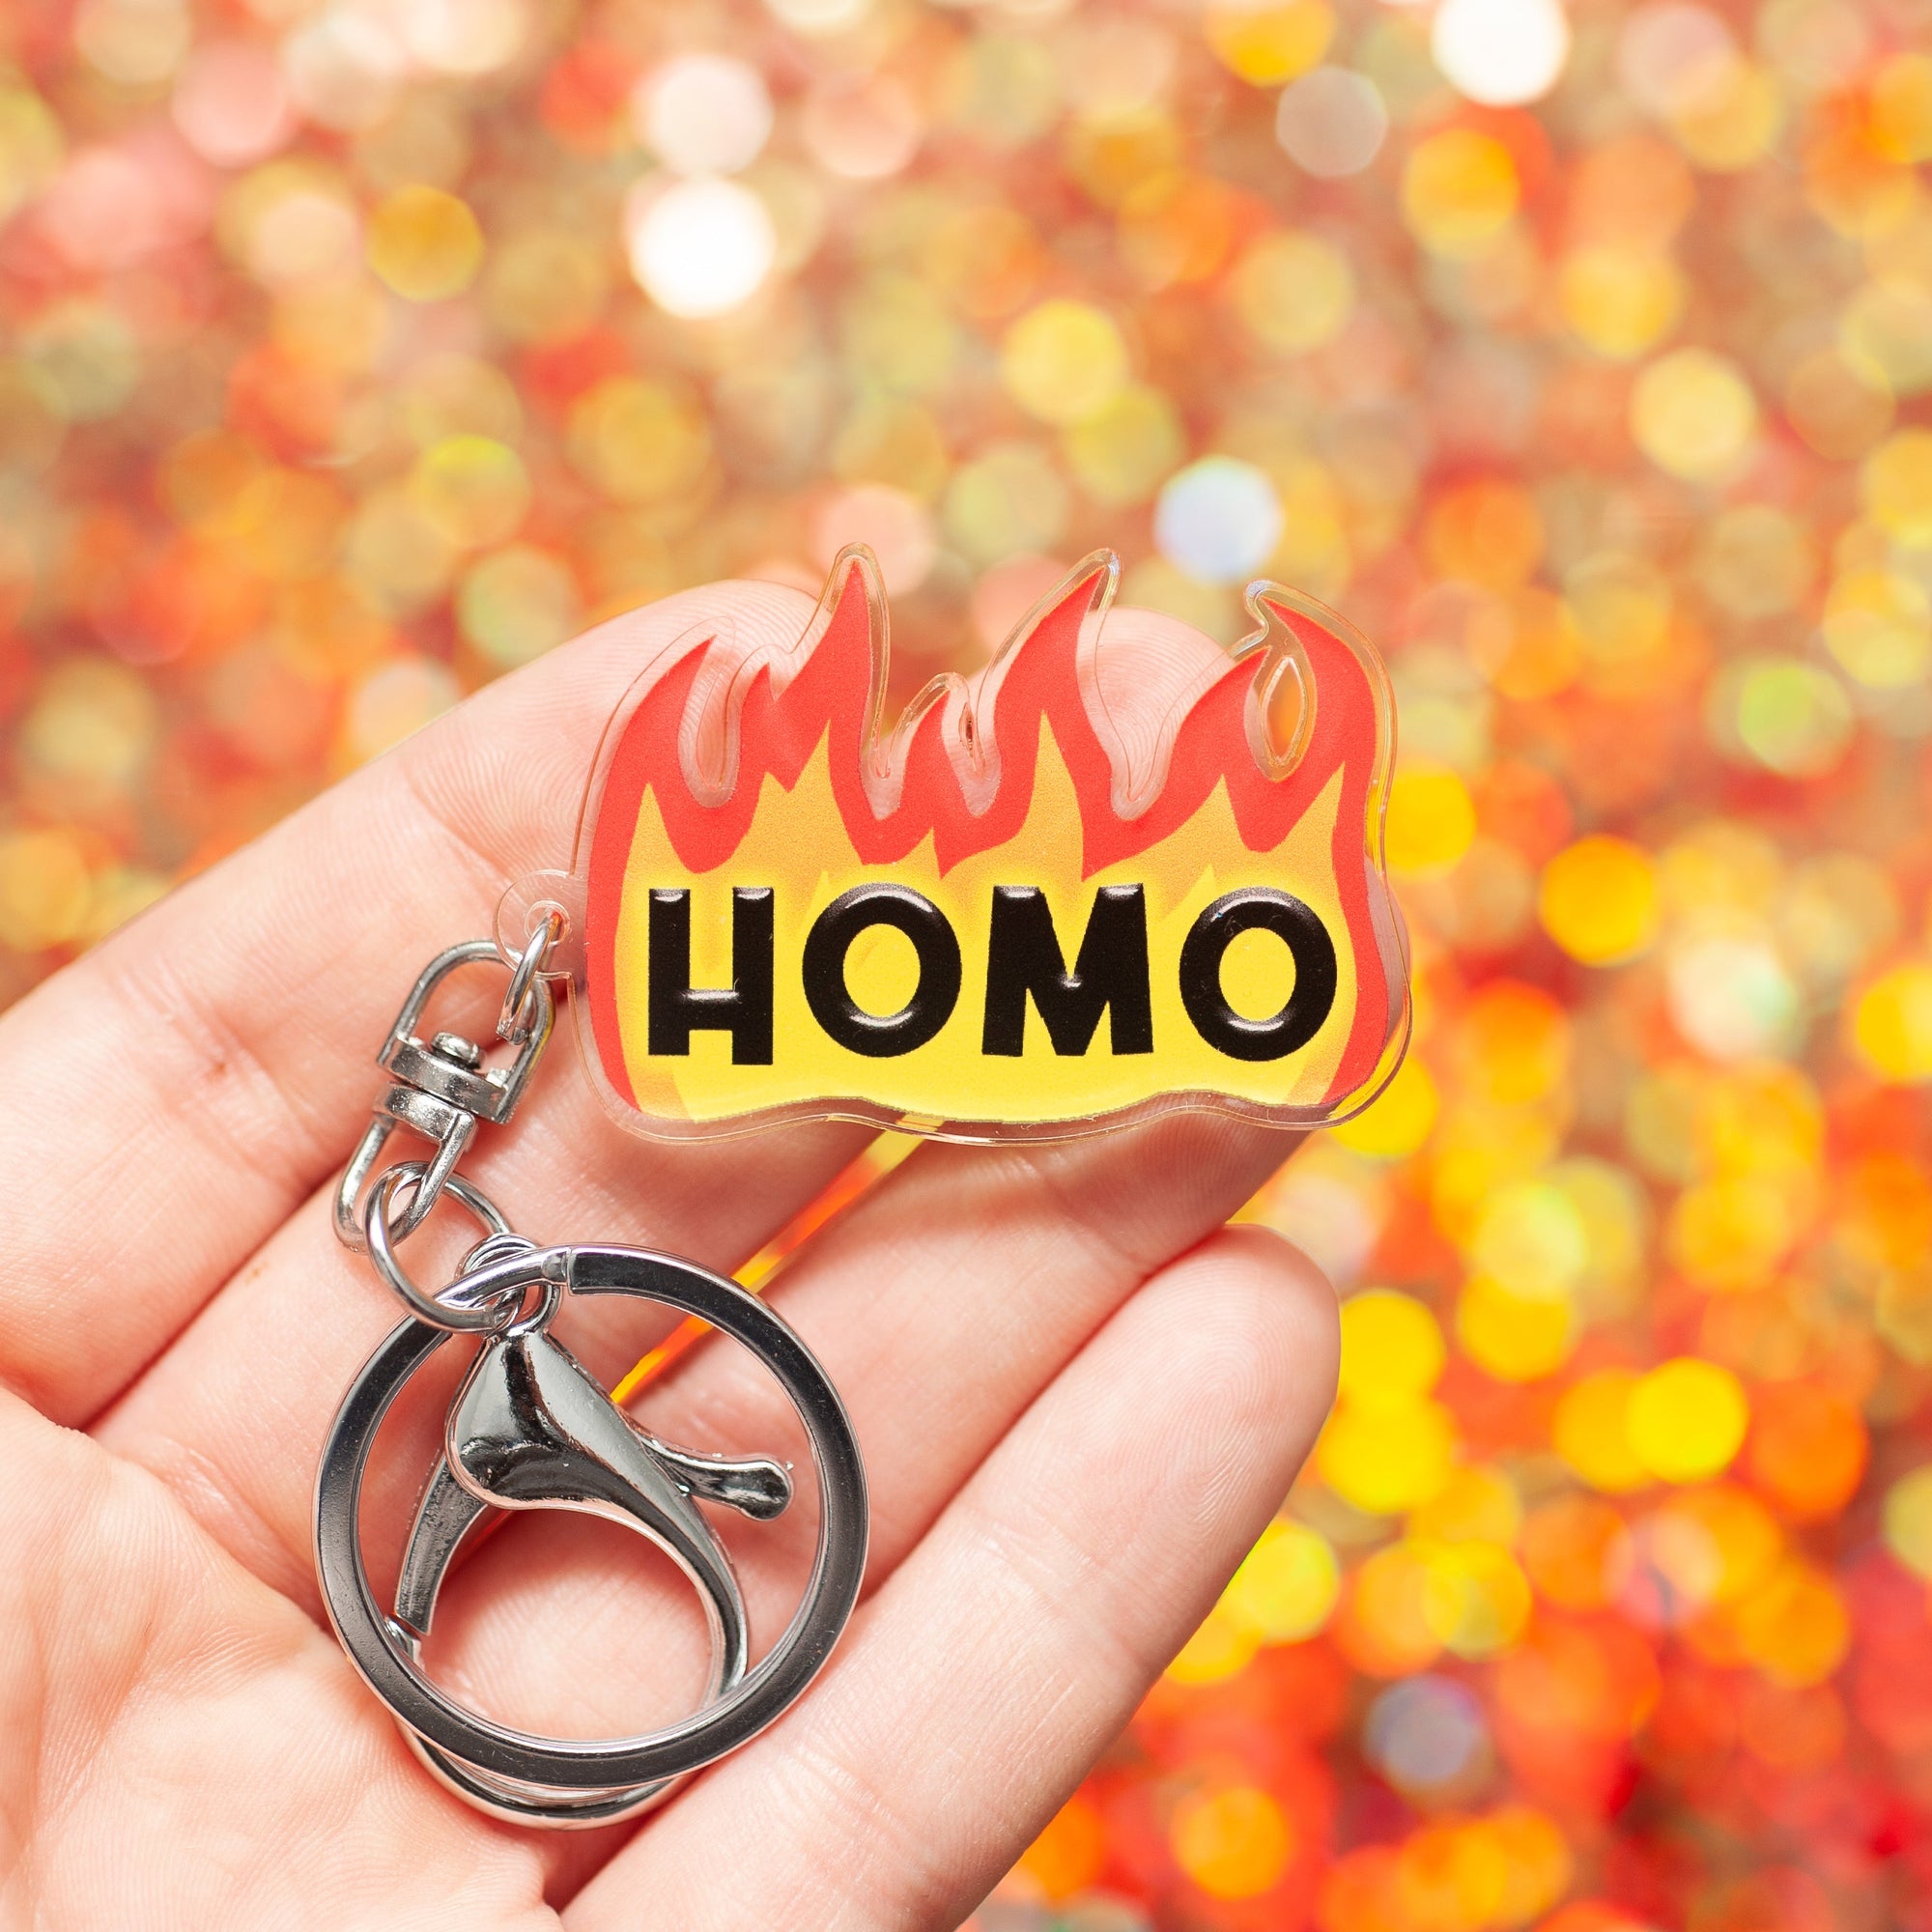 Flaming Homo keychain